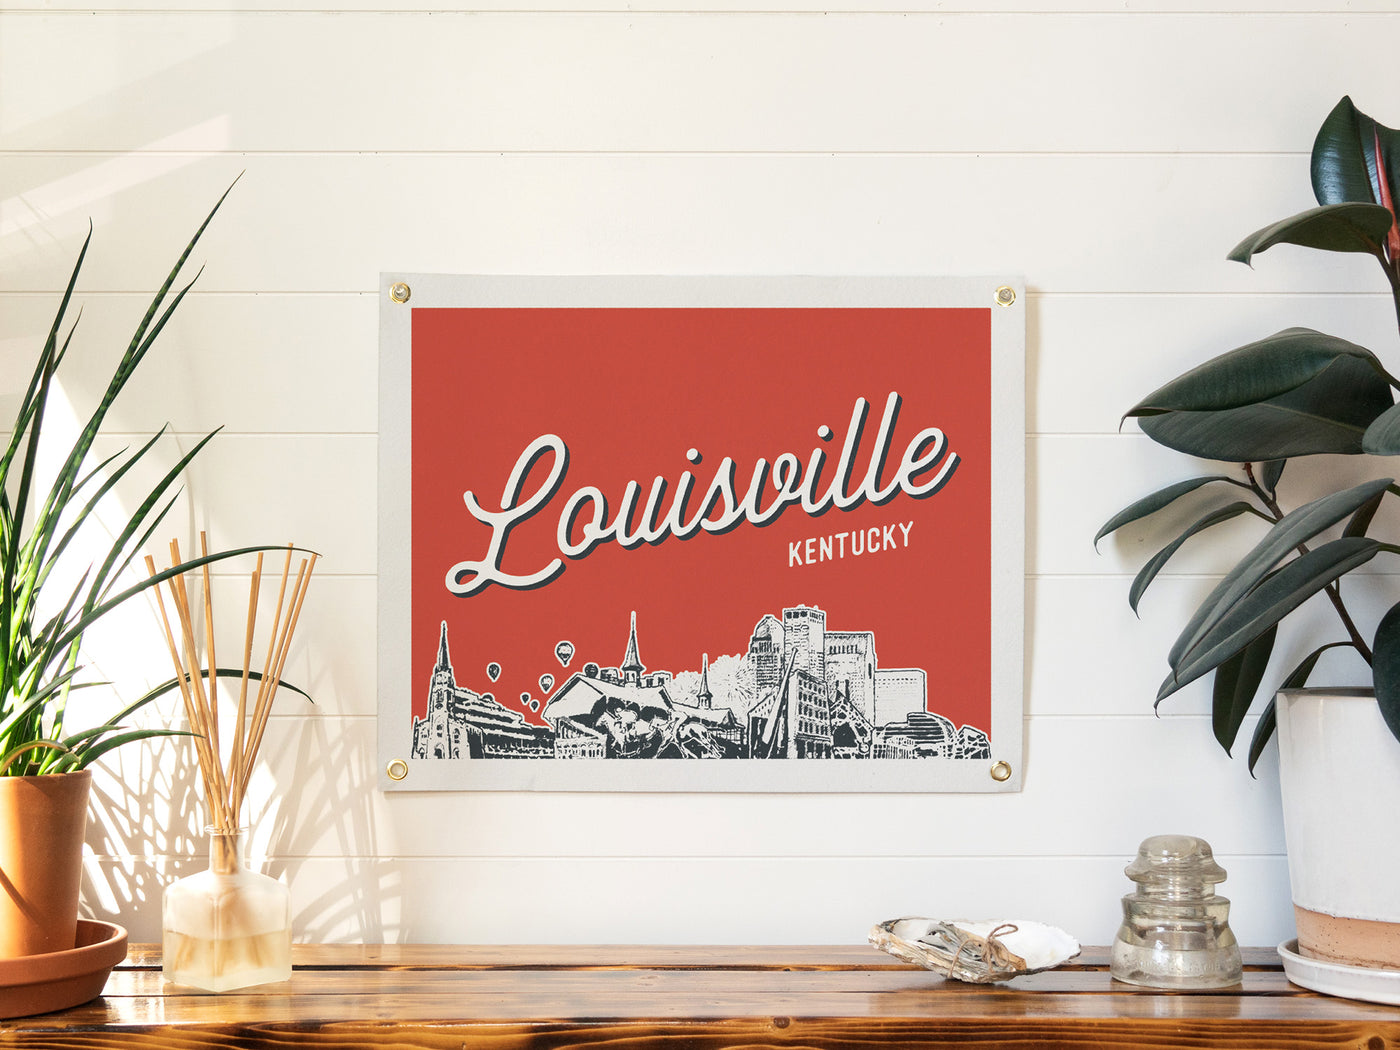 Louisville, Kentucky